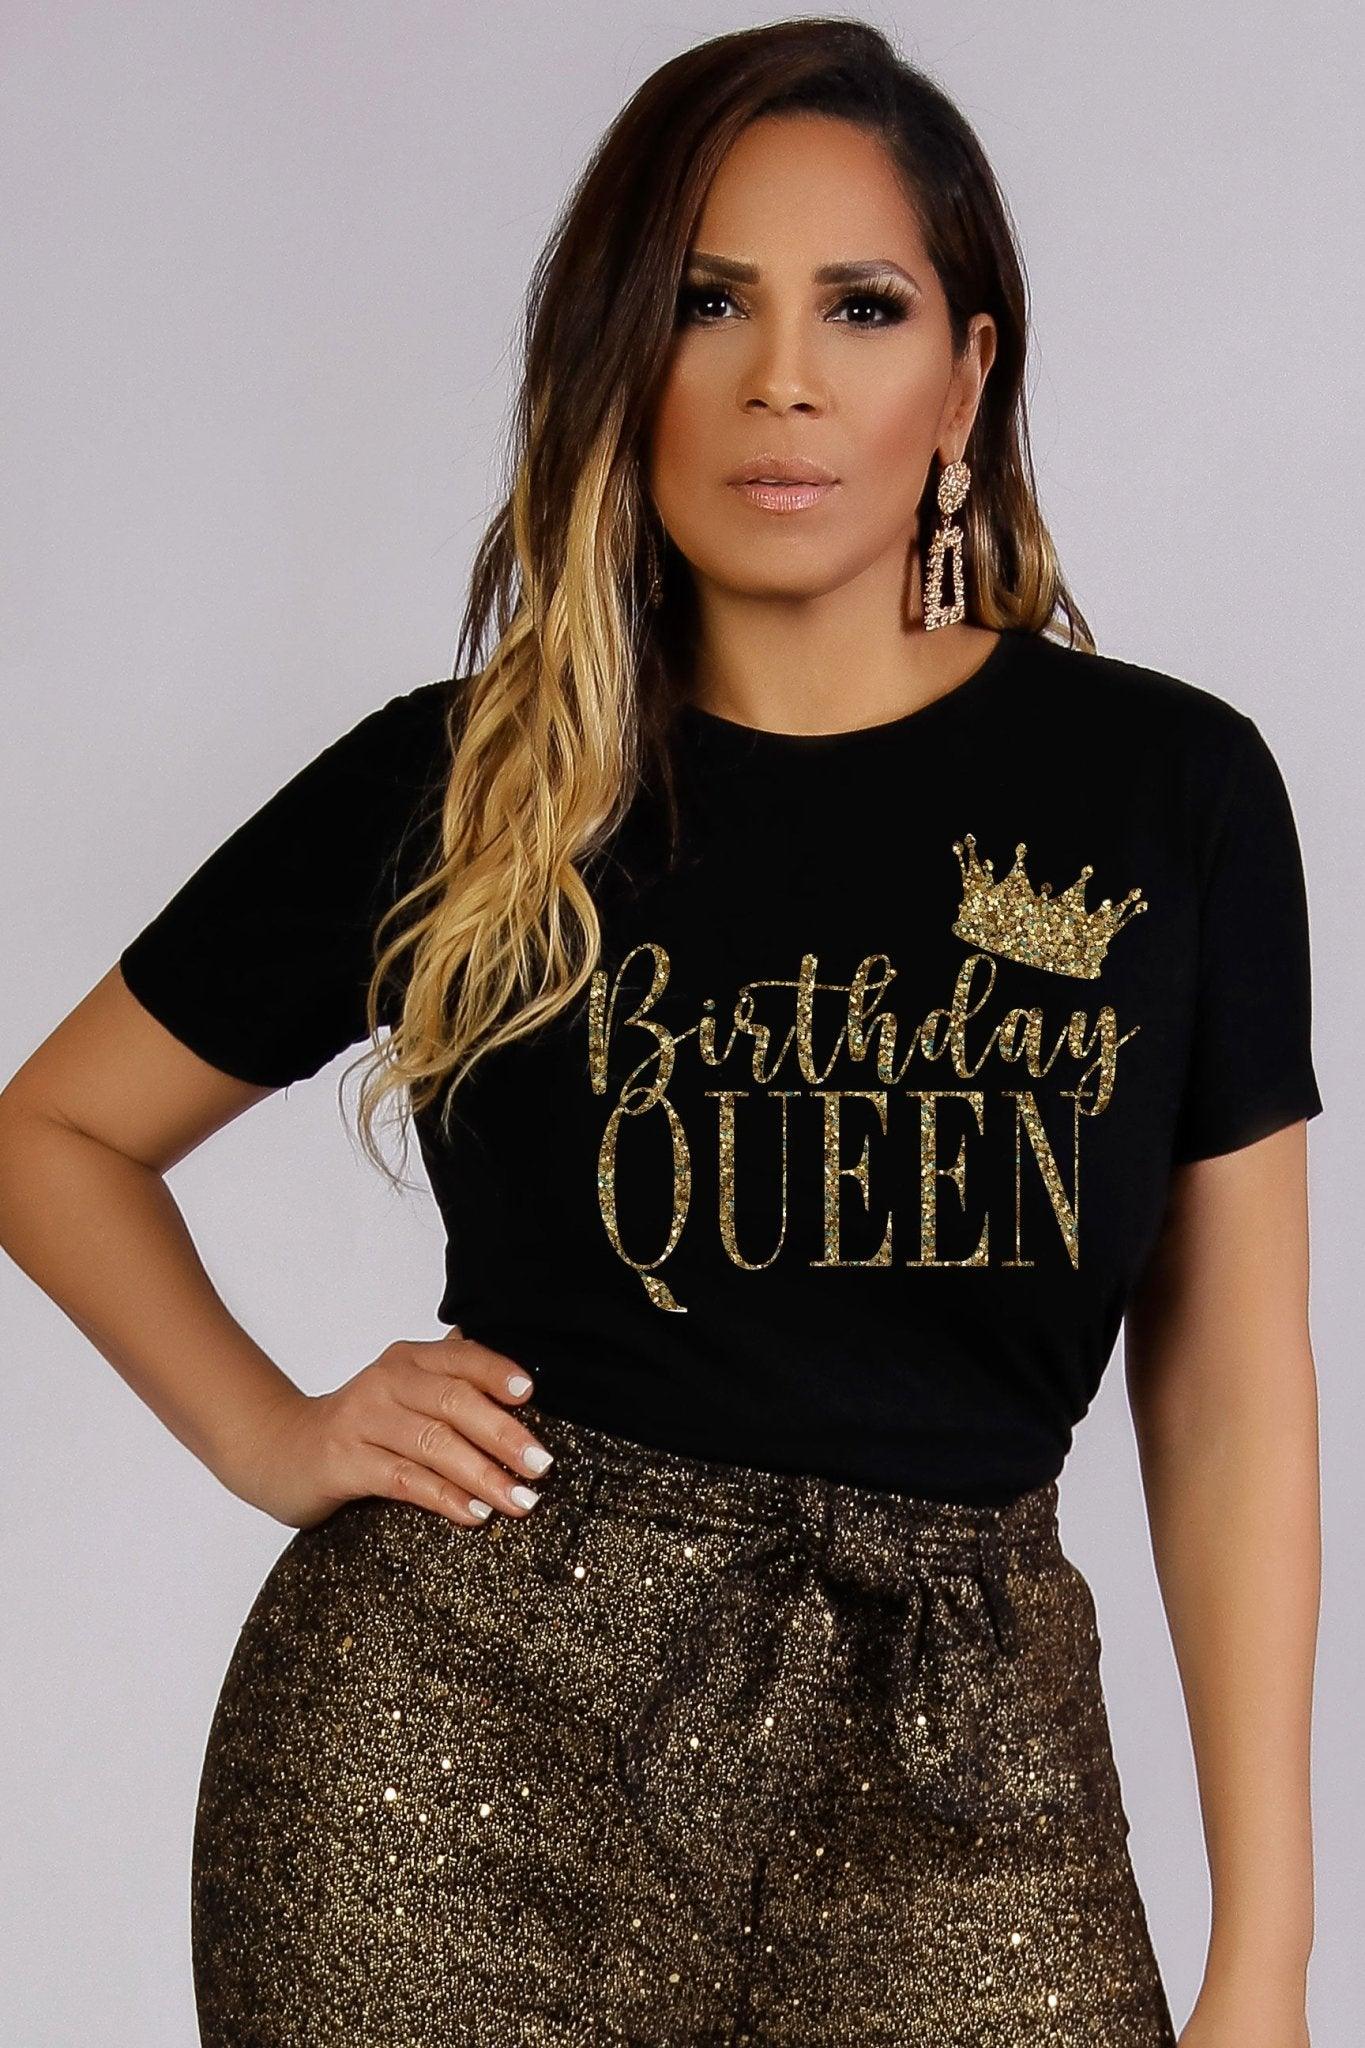 Birthday Queen Glitter Fashion Tee Shirt - MY SEXY STYLES